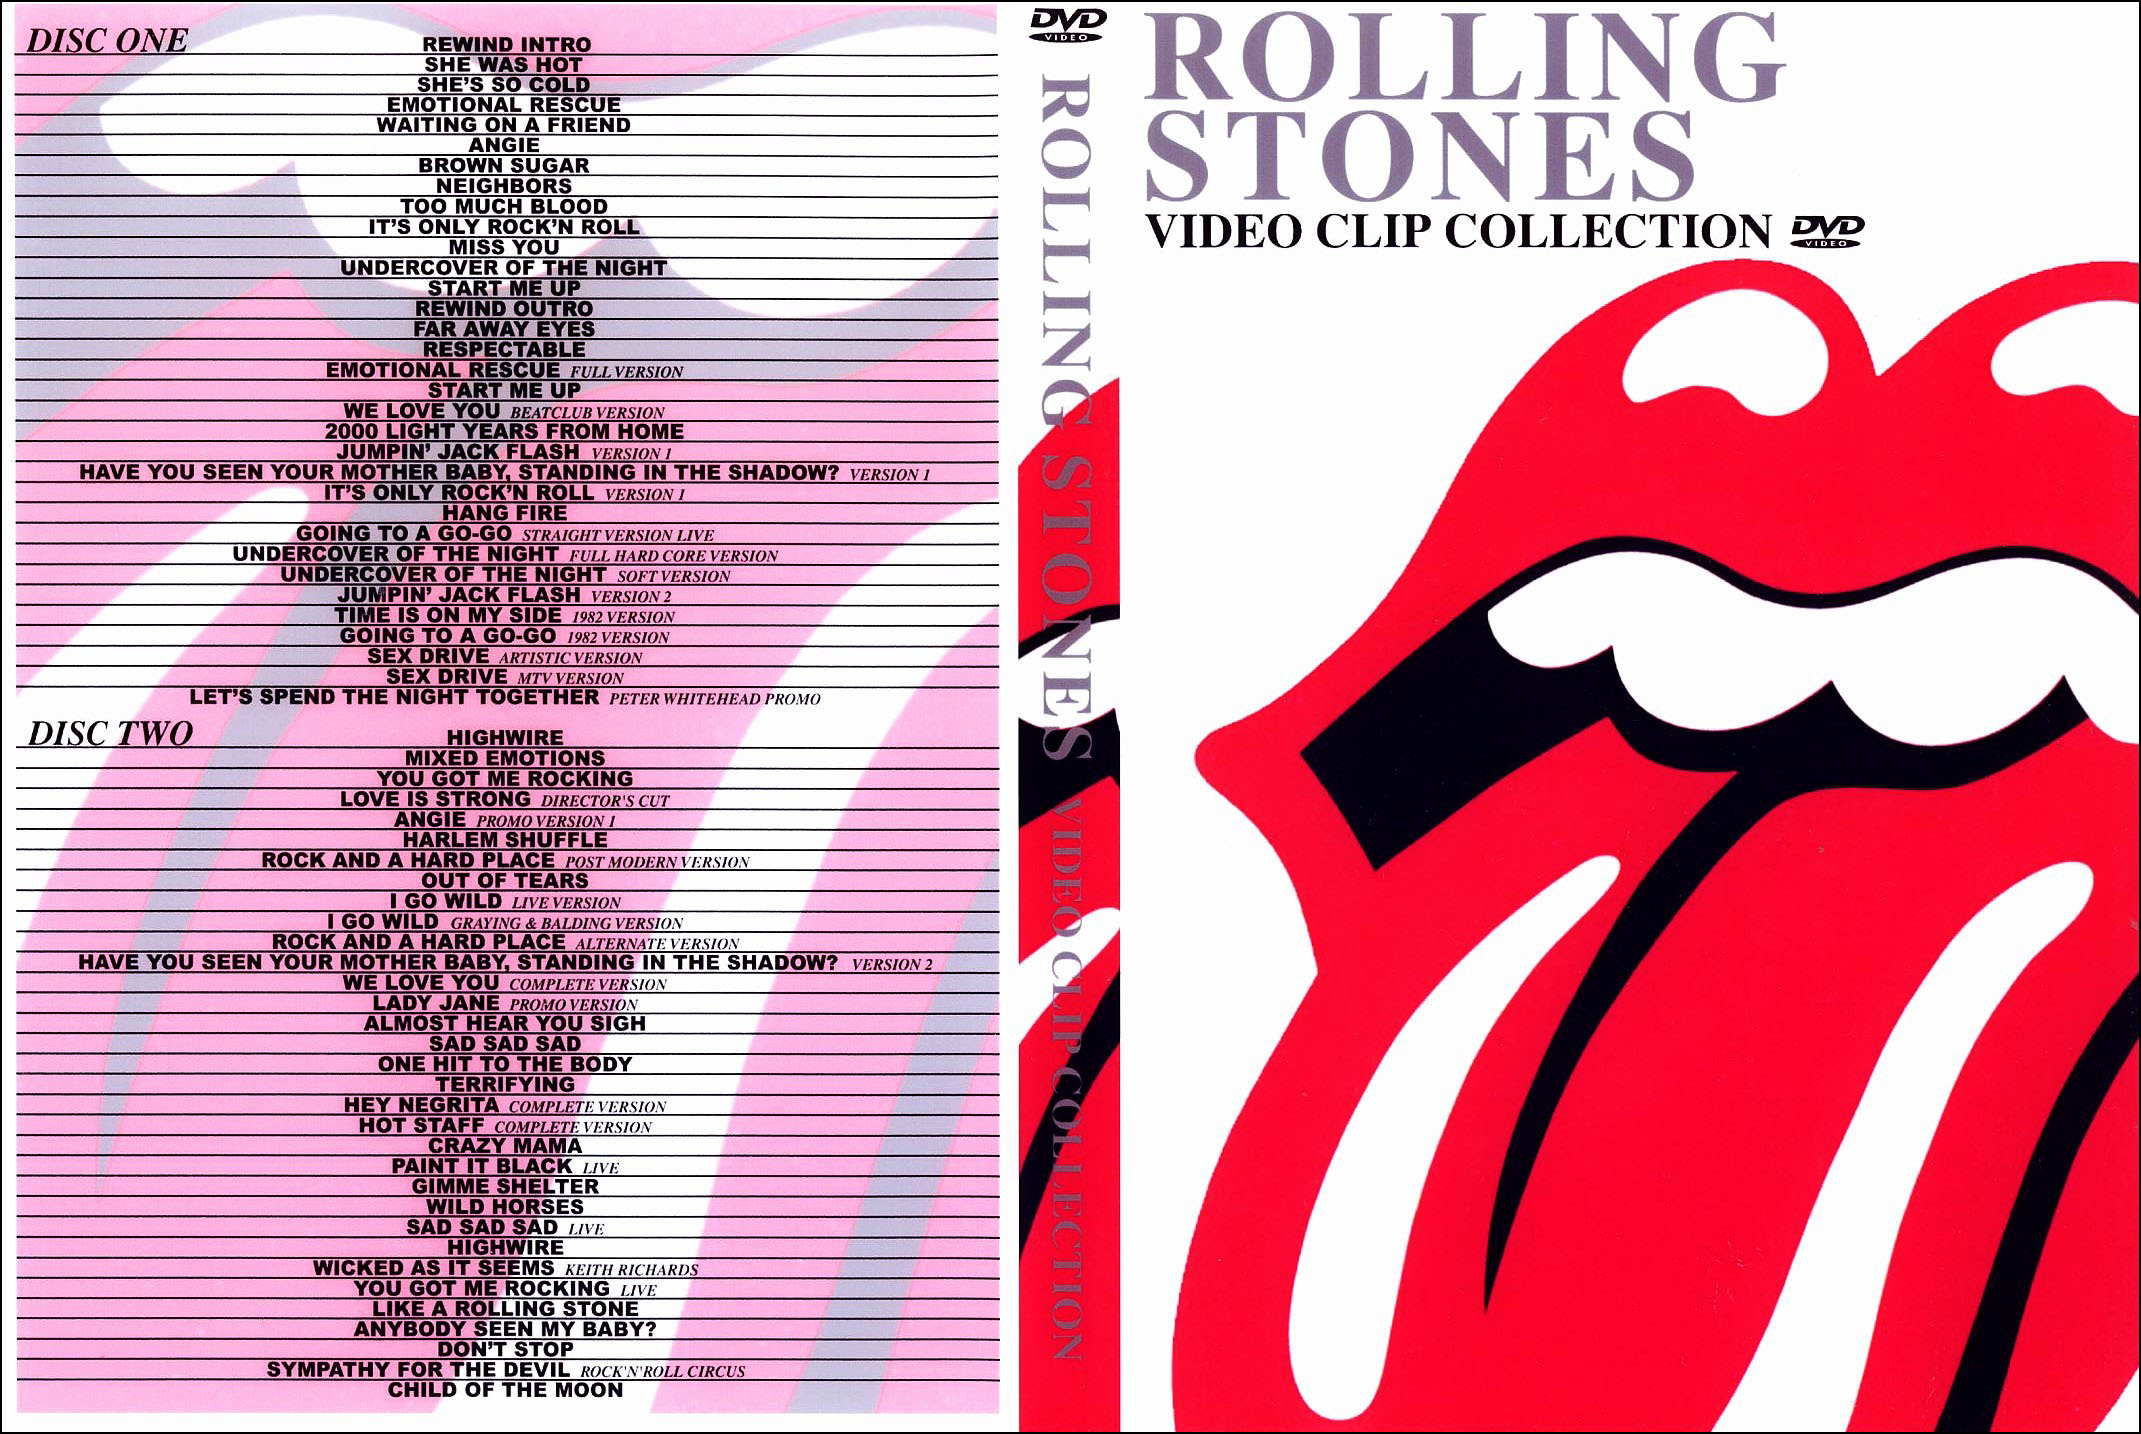 Angie the Rolling Stones. Rolling Stone журнал. The Rolling Stones - Angie фото. Бритни на обложке Роллинг стоунз.